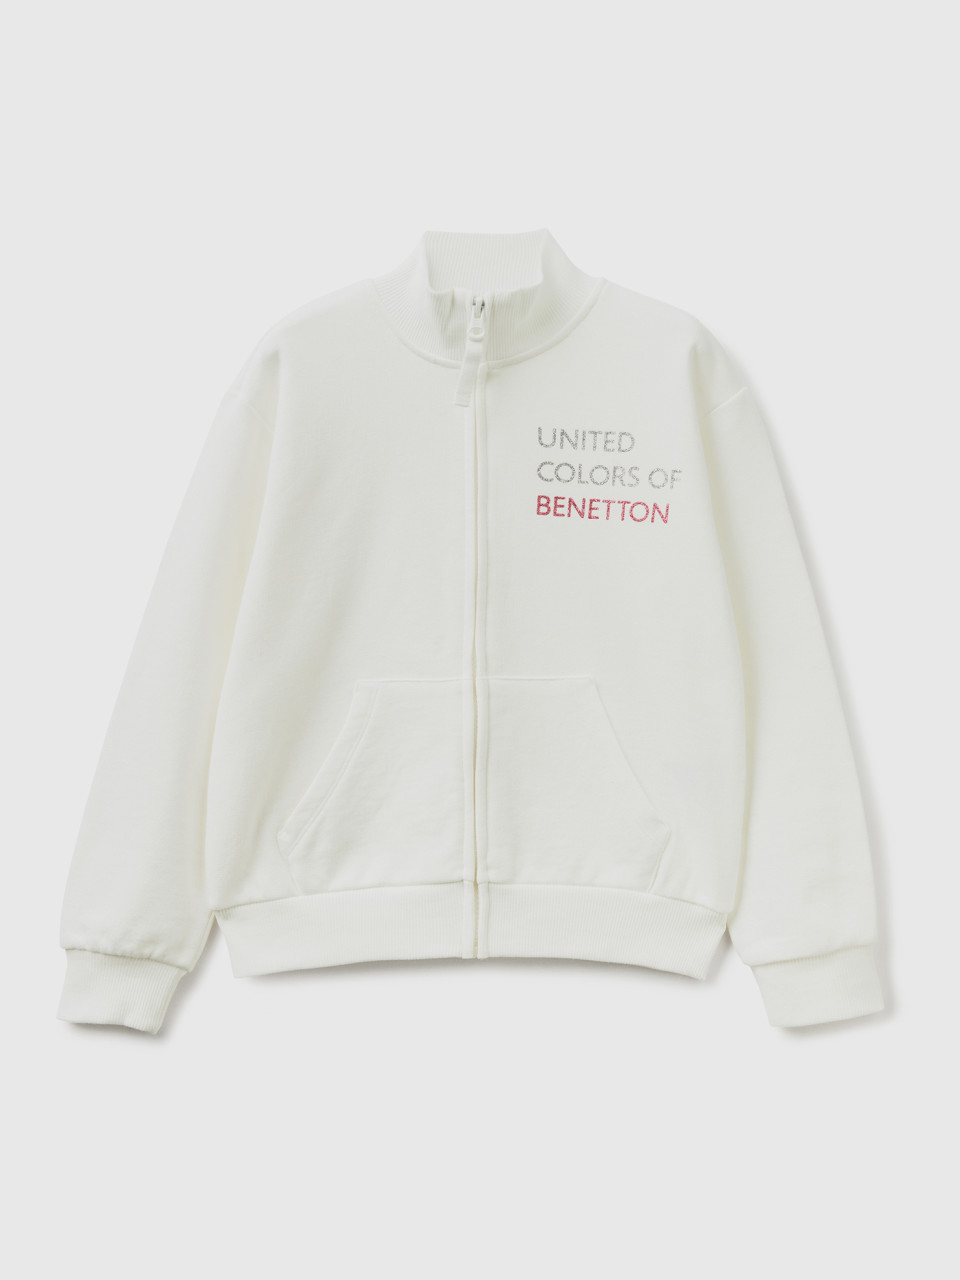 Benetton, Sweatshirt With Zip And Collar, Creamy White, Kids